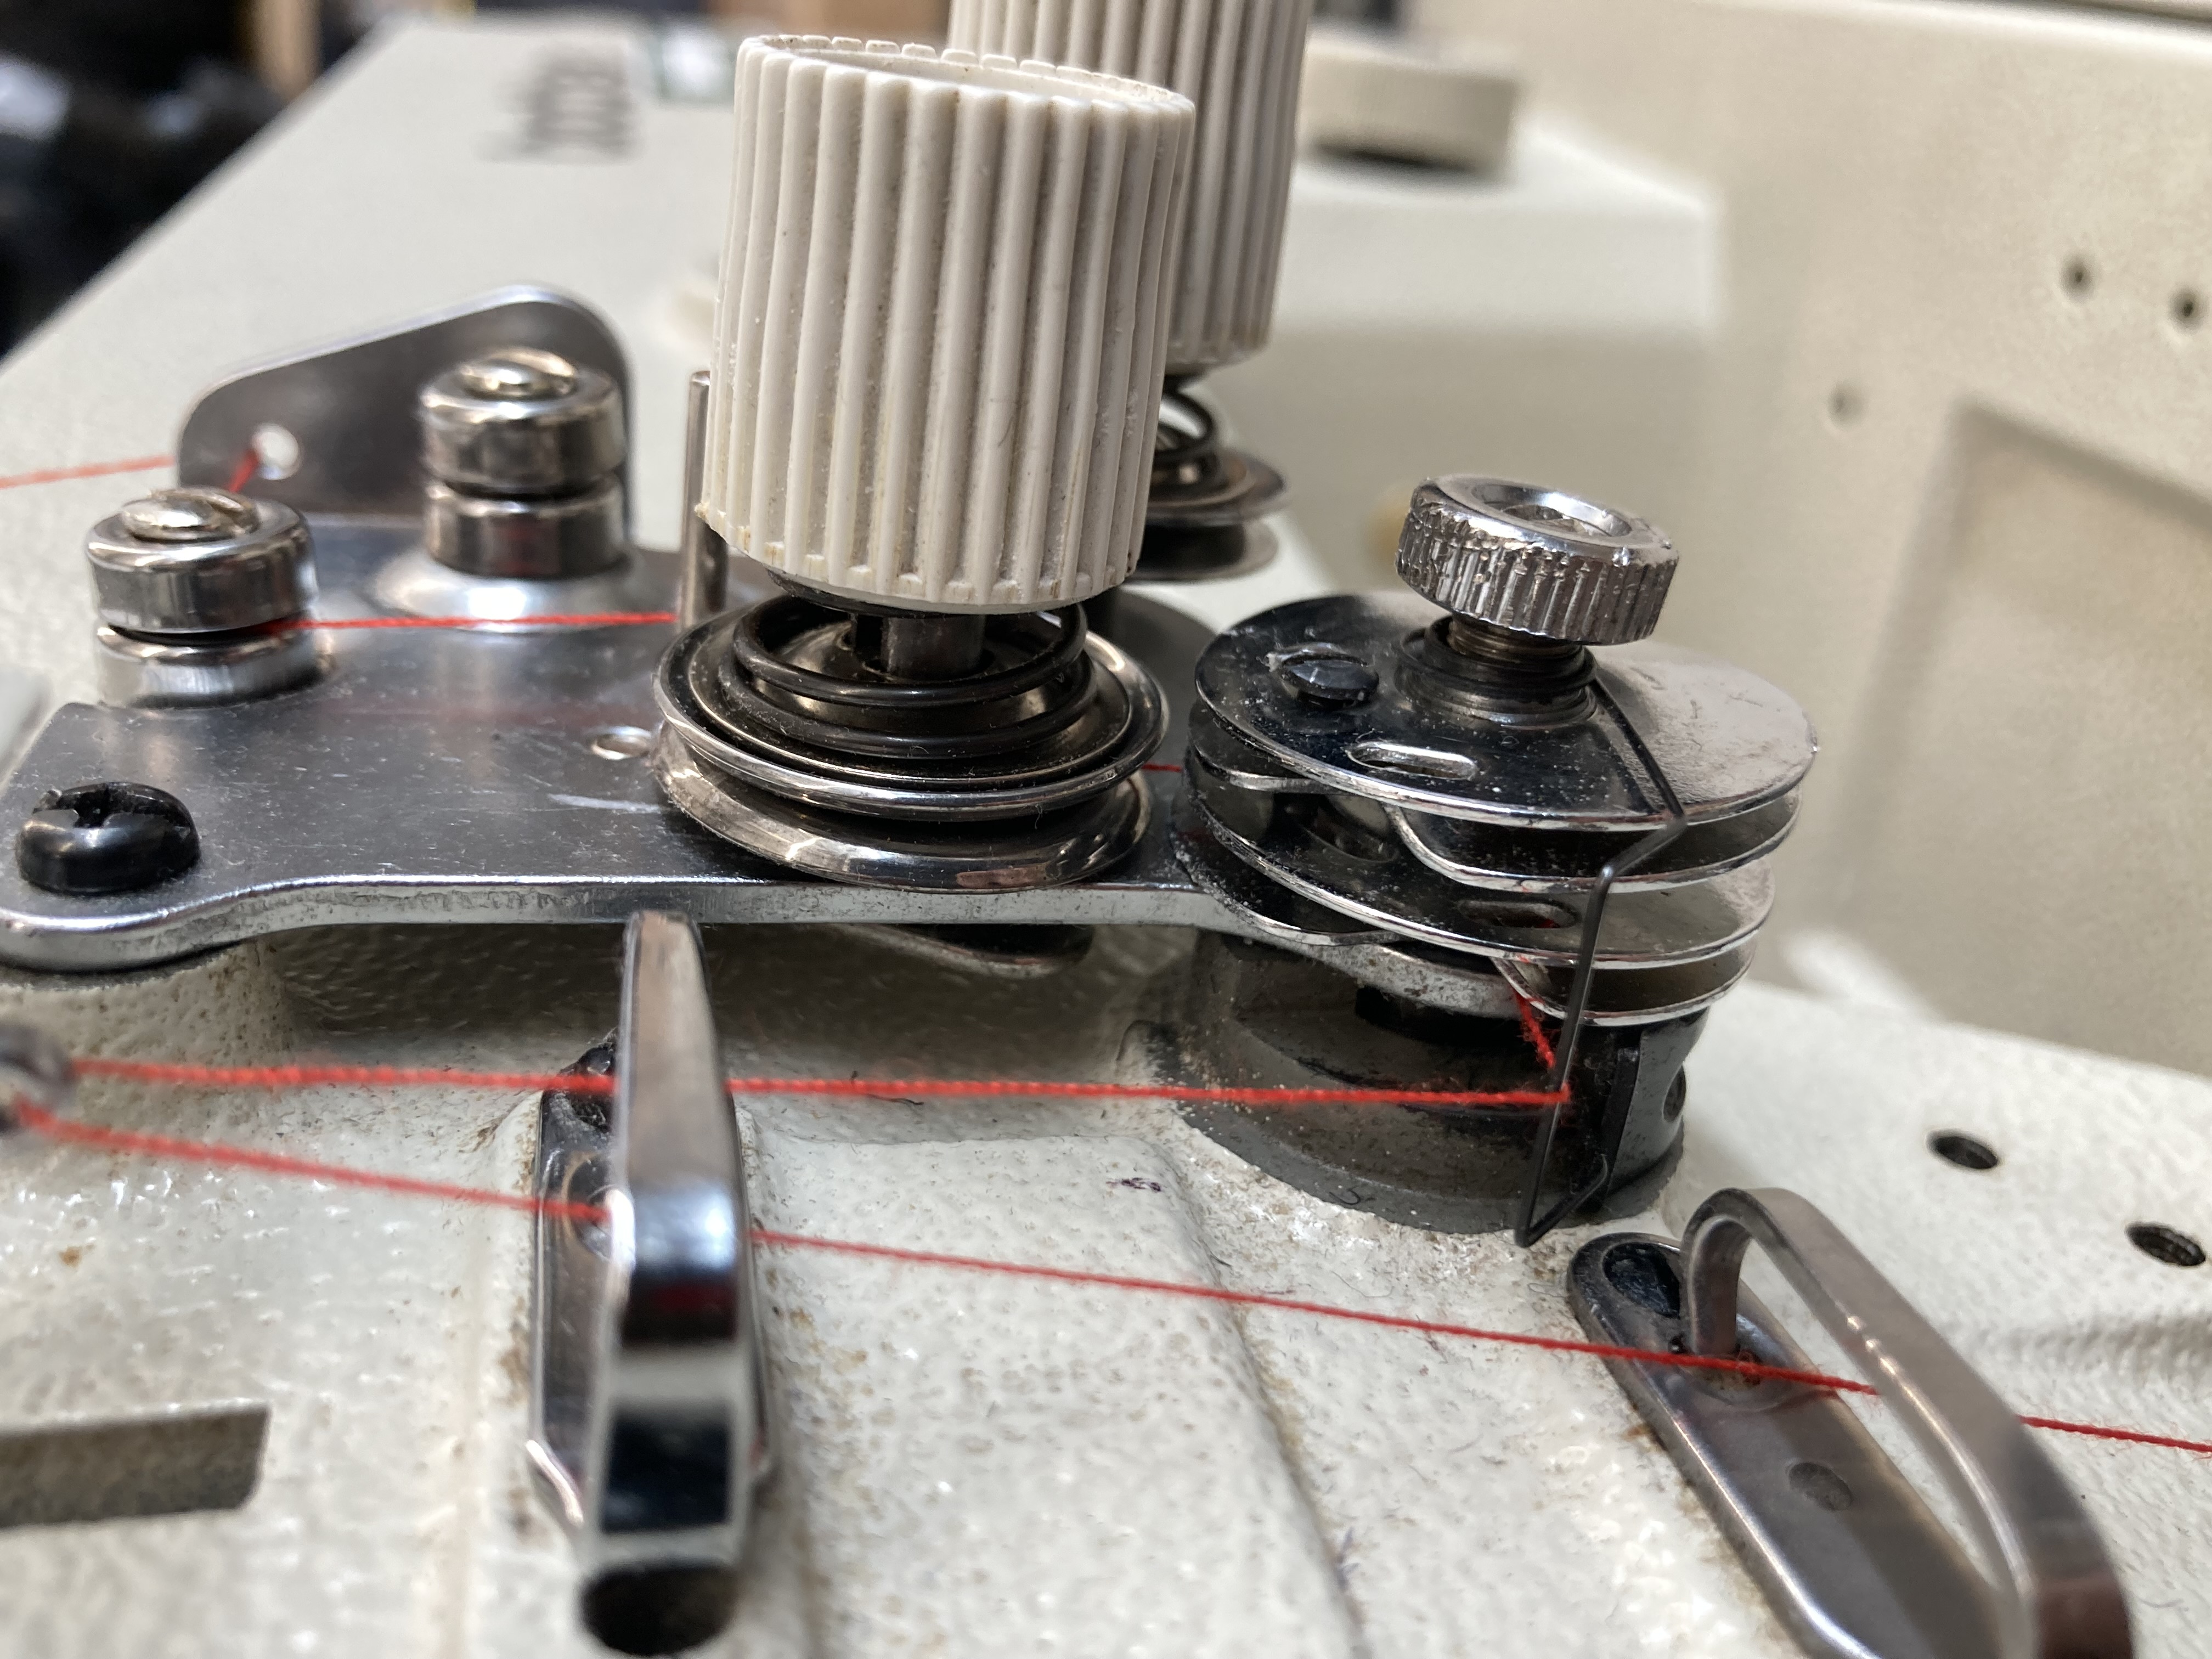 Thread path detail on an industrial sewing machine